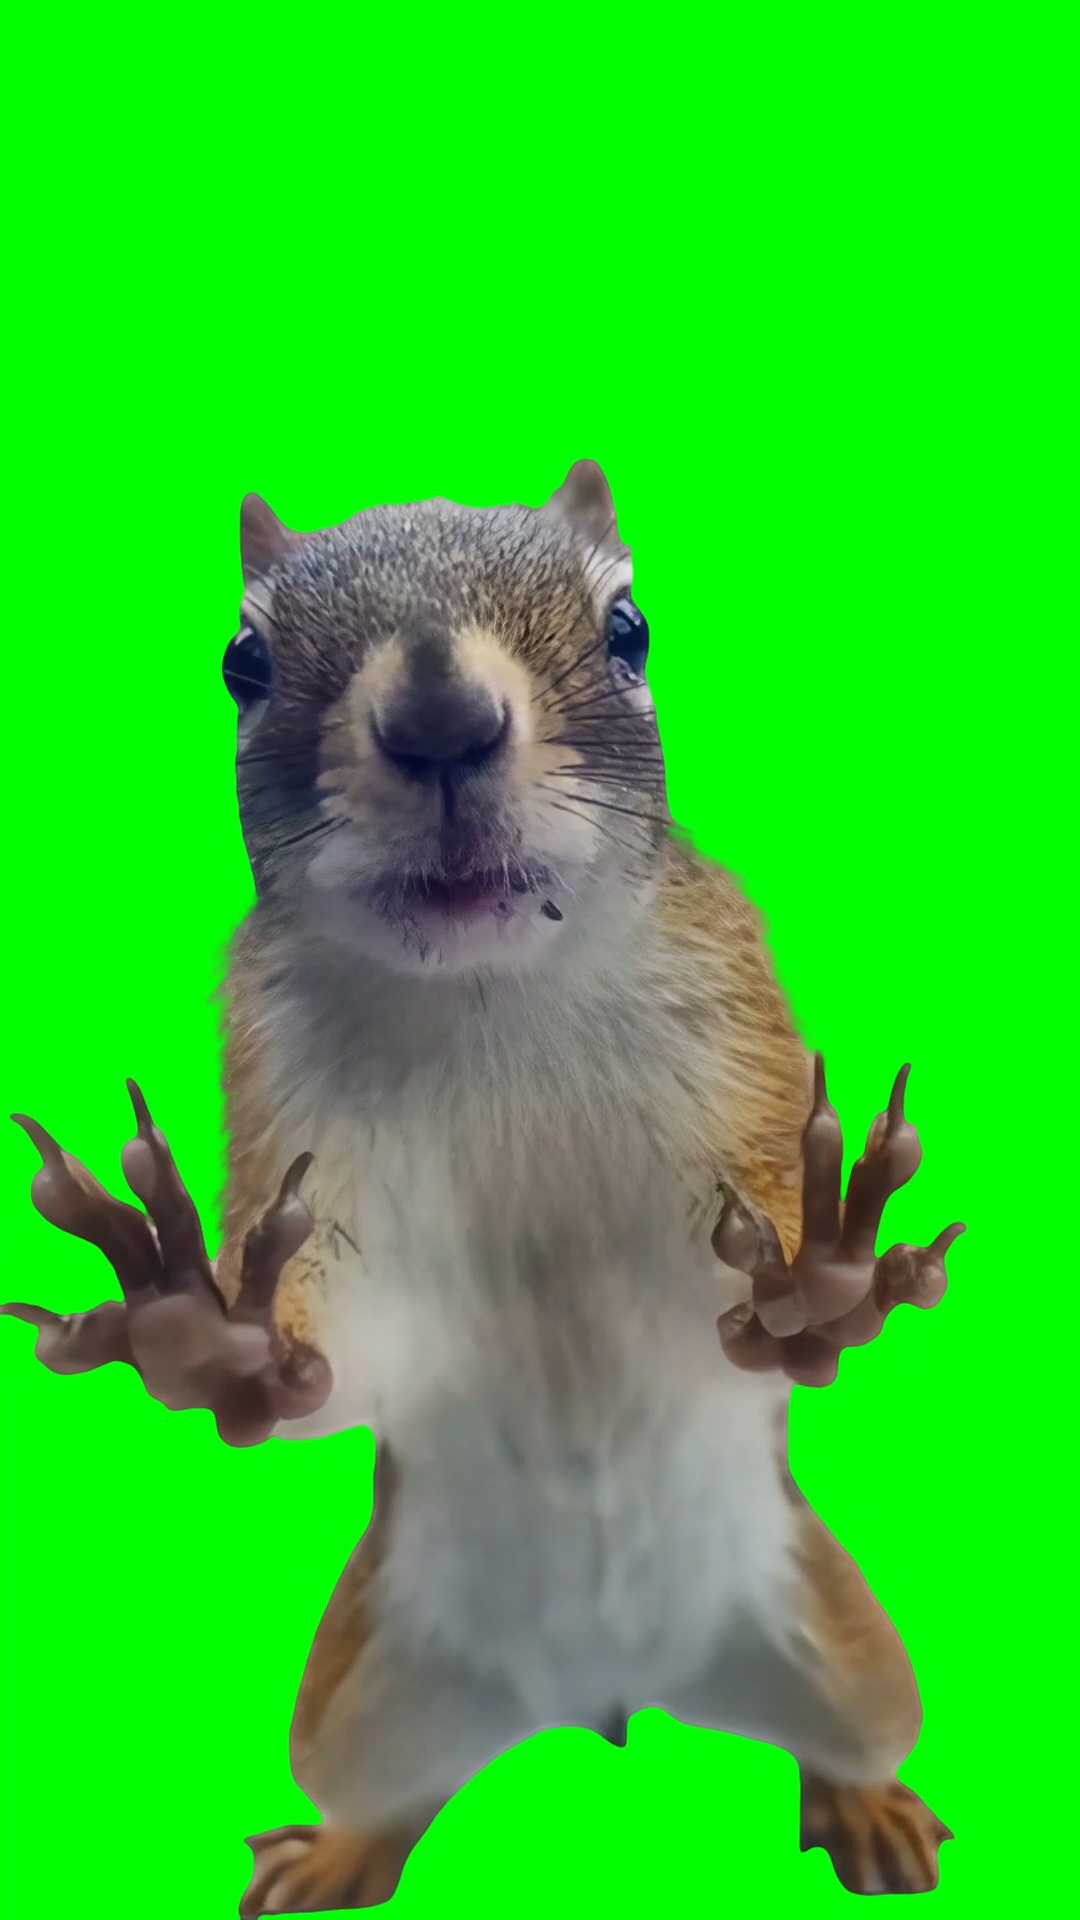 Squirrel roaring (Green Screen)